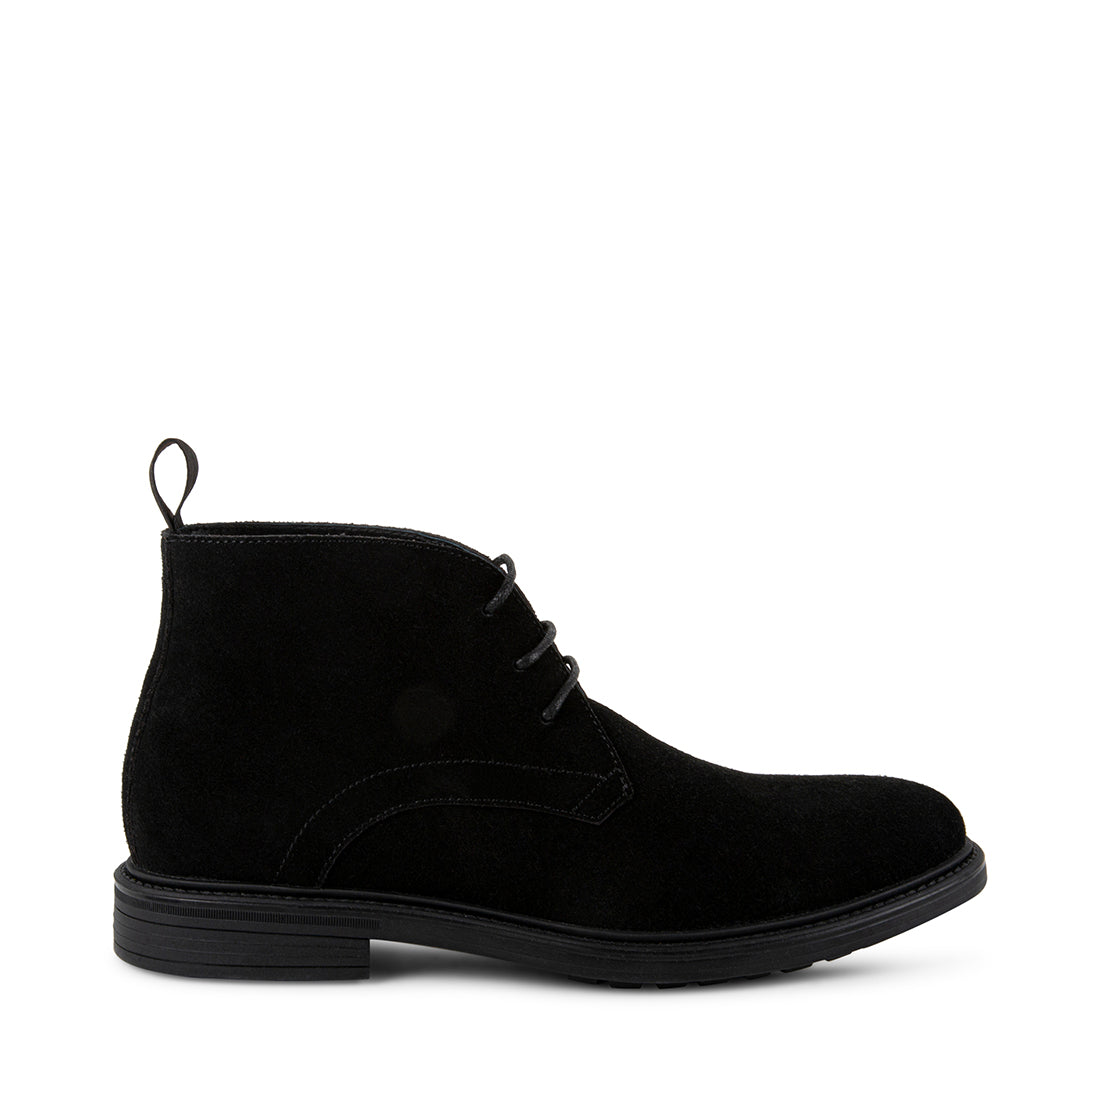 CREWW Black Suede Men's Boots | Men's Designer Boots – Steve Madden Canada